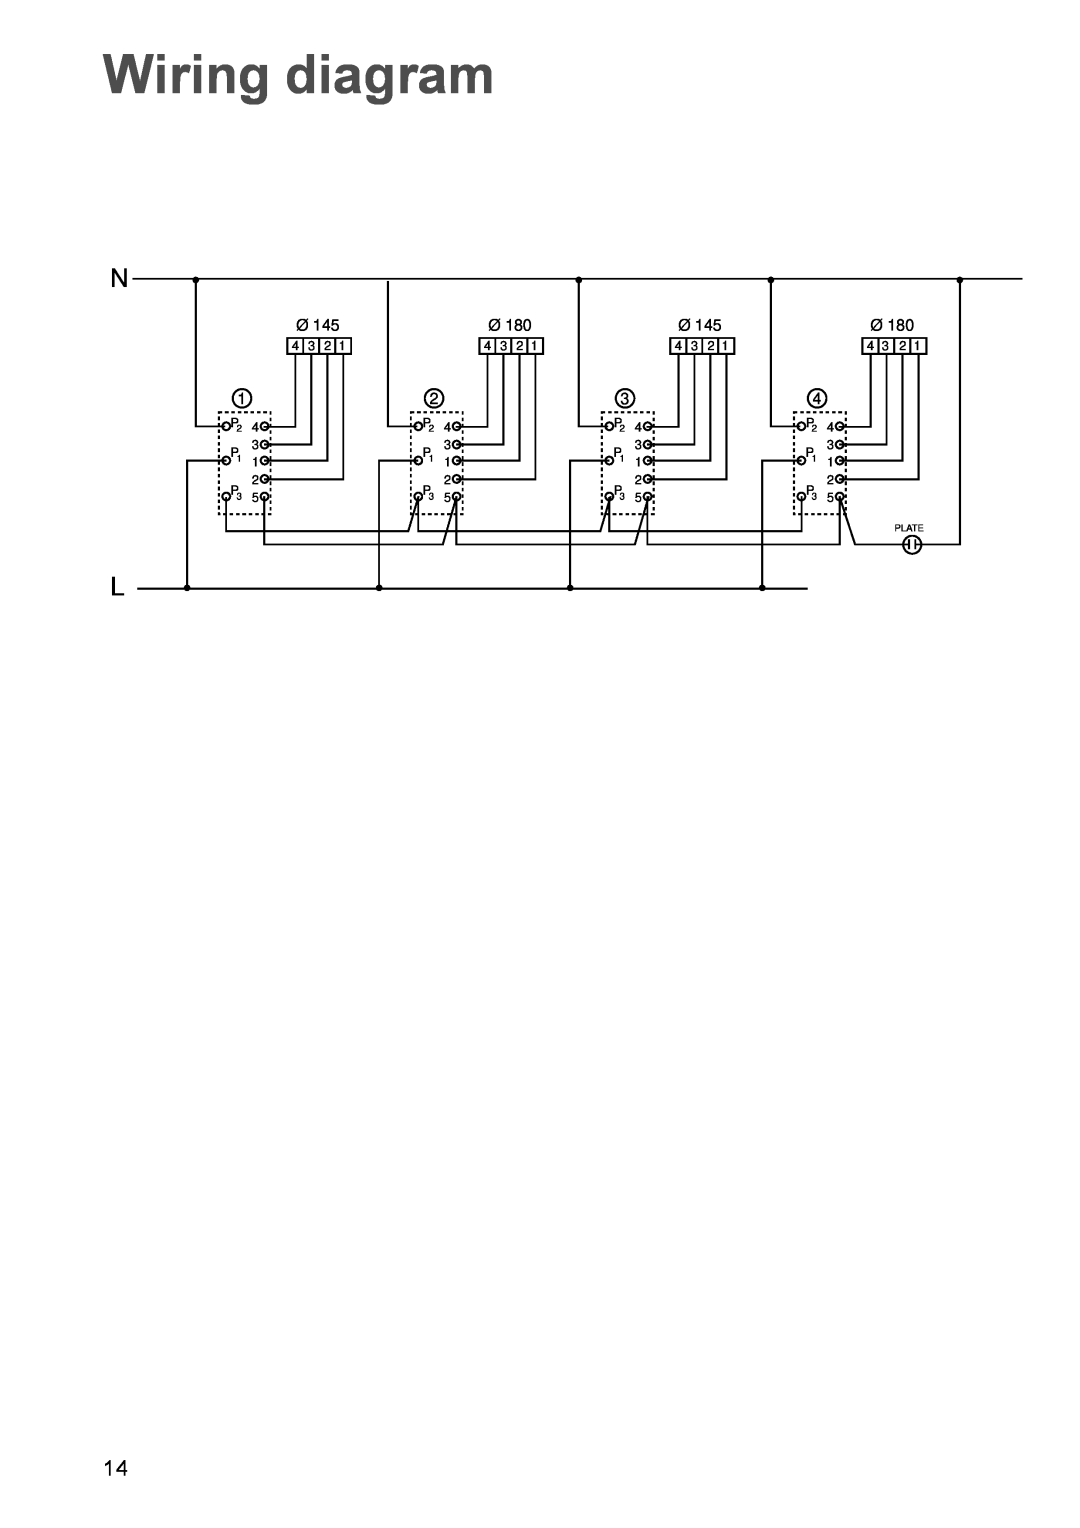 Tricity Bendix TBE 635 manual Wiring diagram, 4 3 2, P2 3 P1 2 P3, Plate 